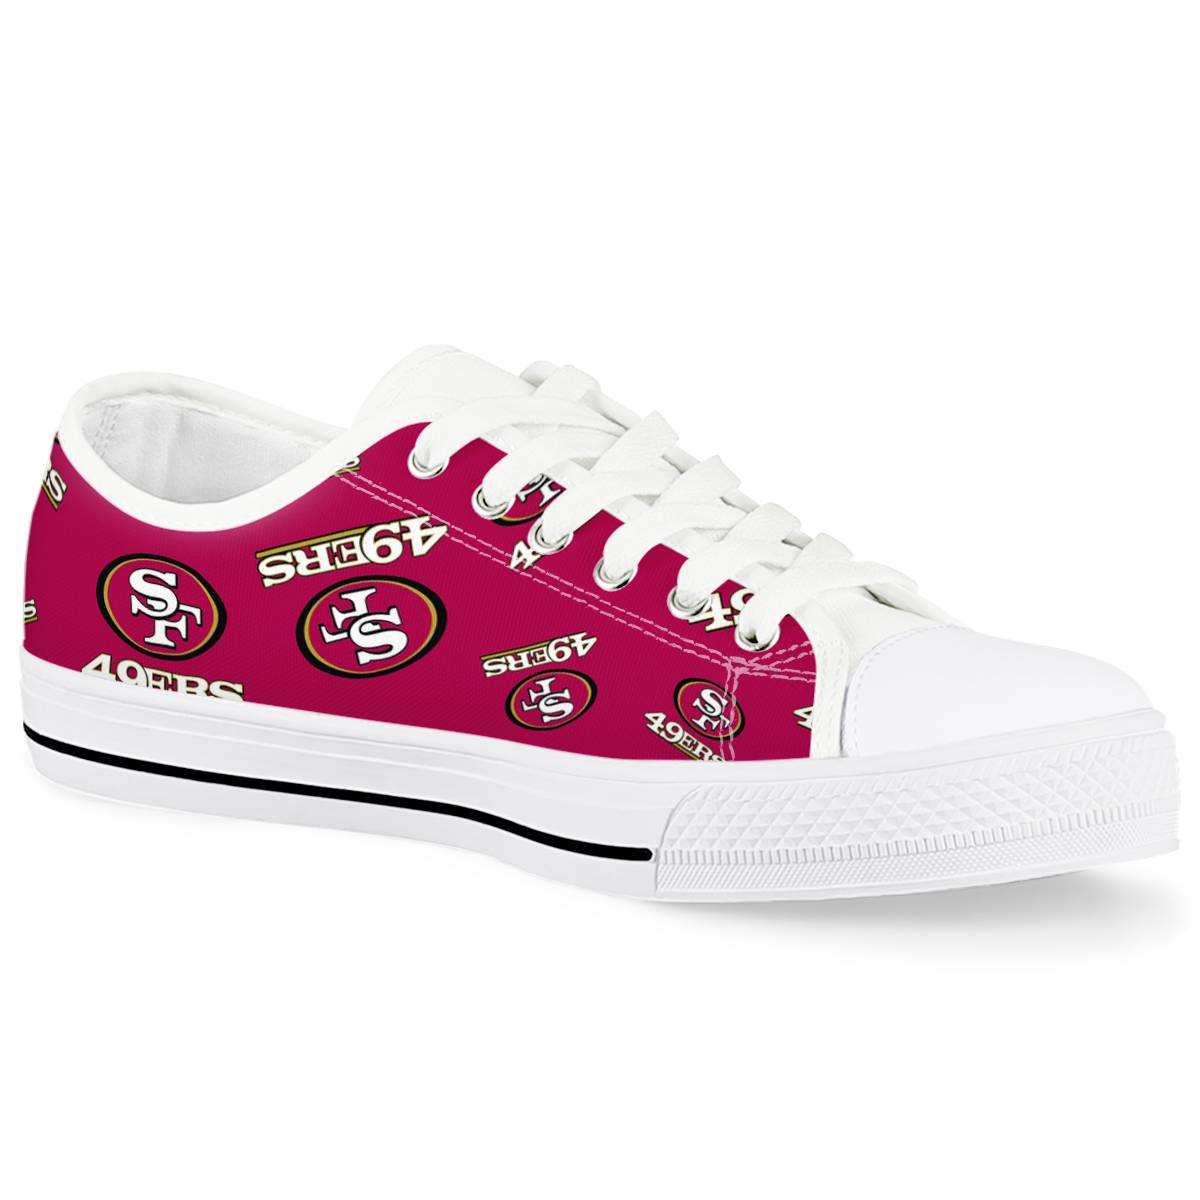 Women's San Francisco 49ers Low Top Canvas Sneakers 005